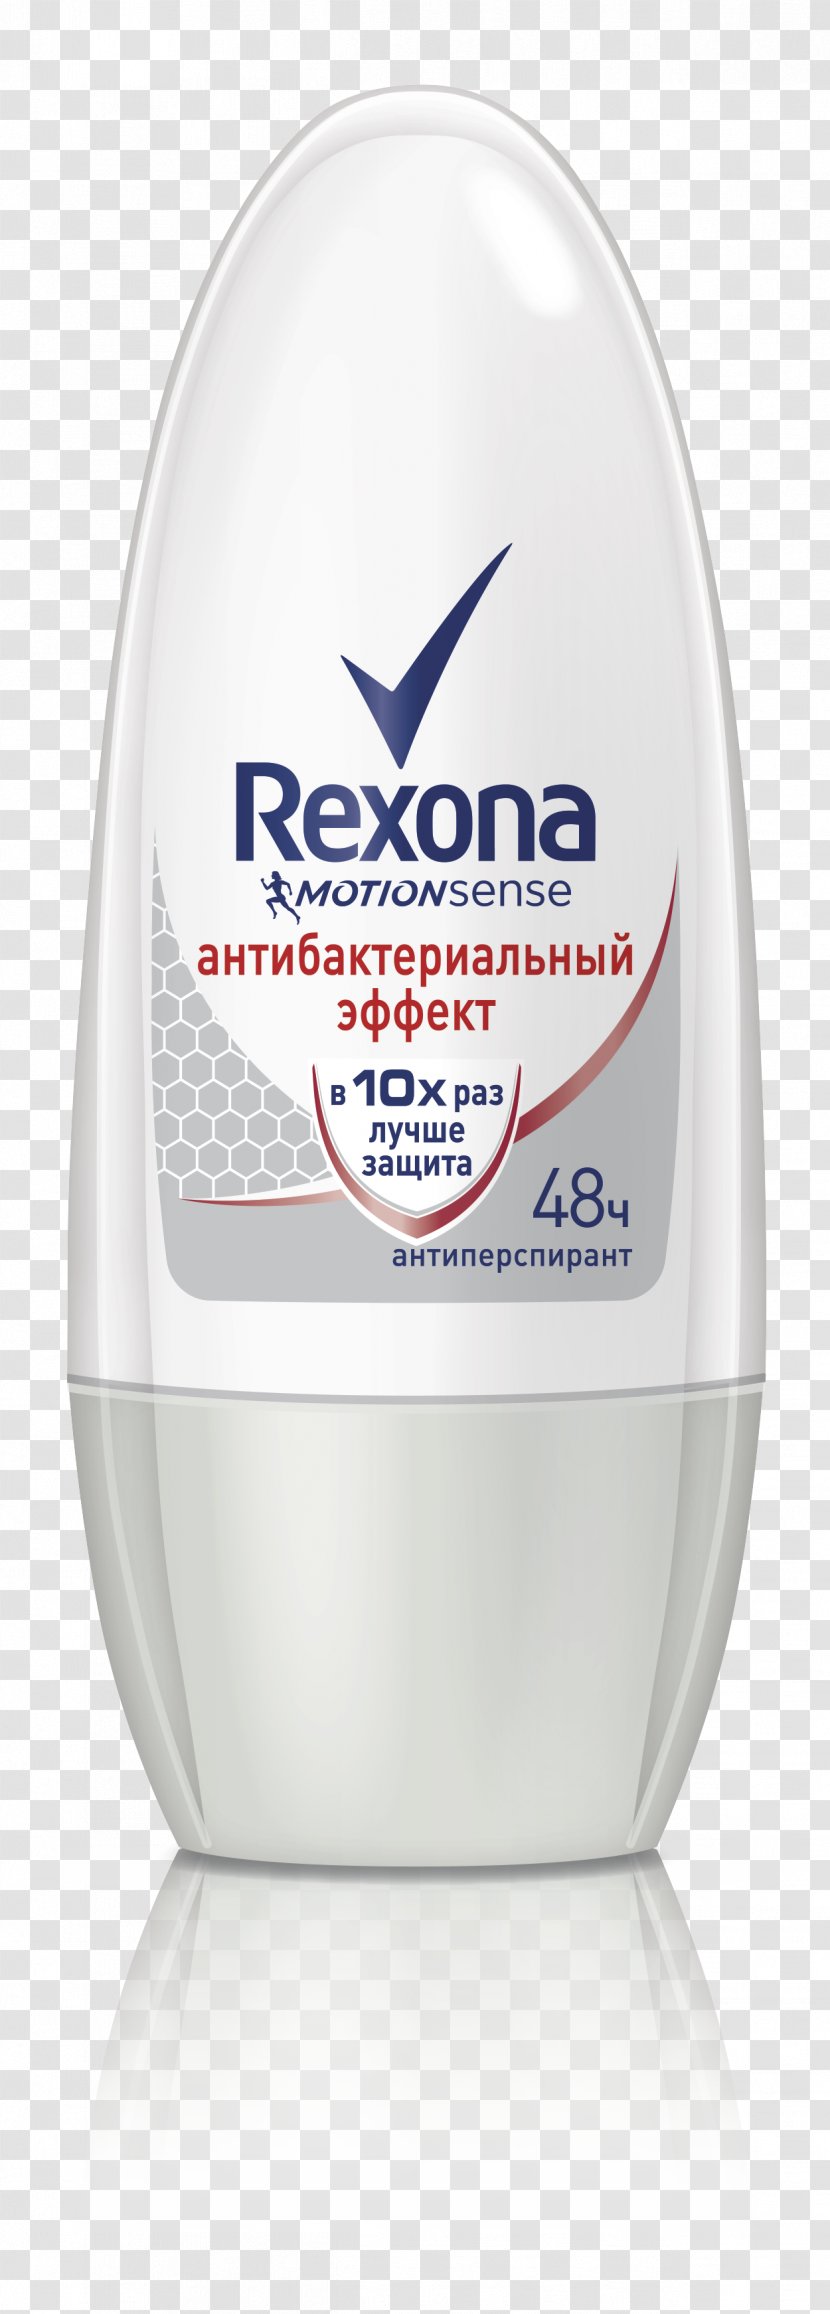 Rexona Deodorant Antiperspirant Hygiene Lotion - Aerosol Transparent PNG